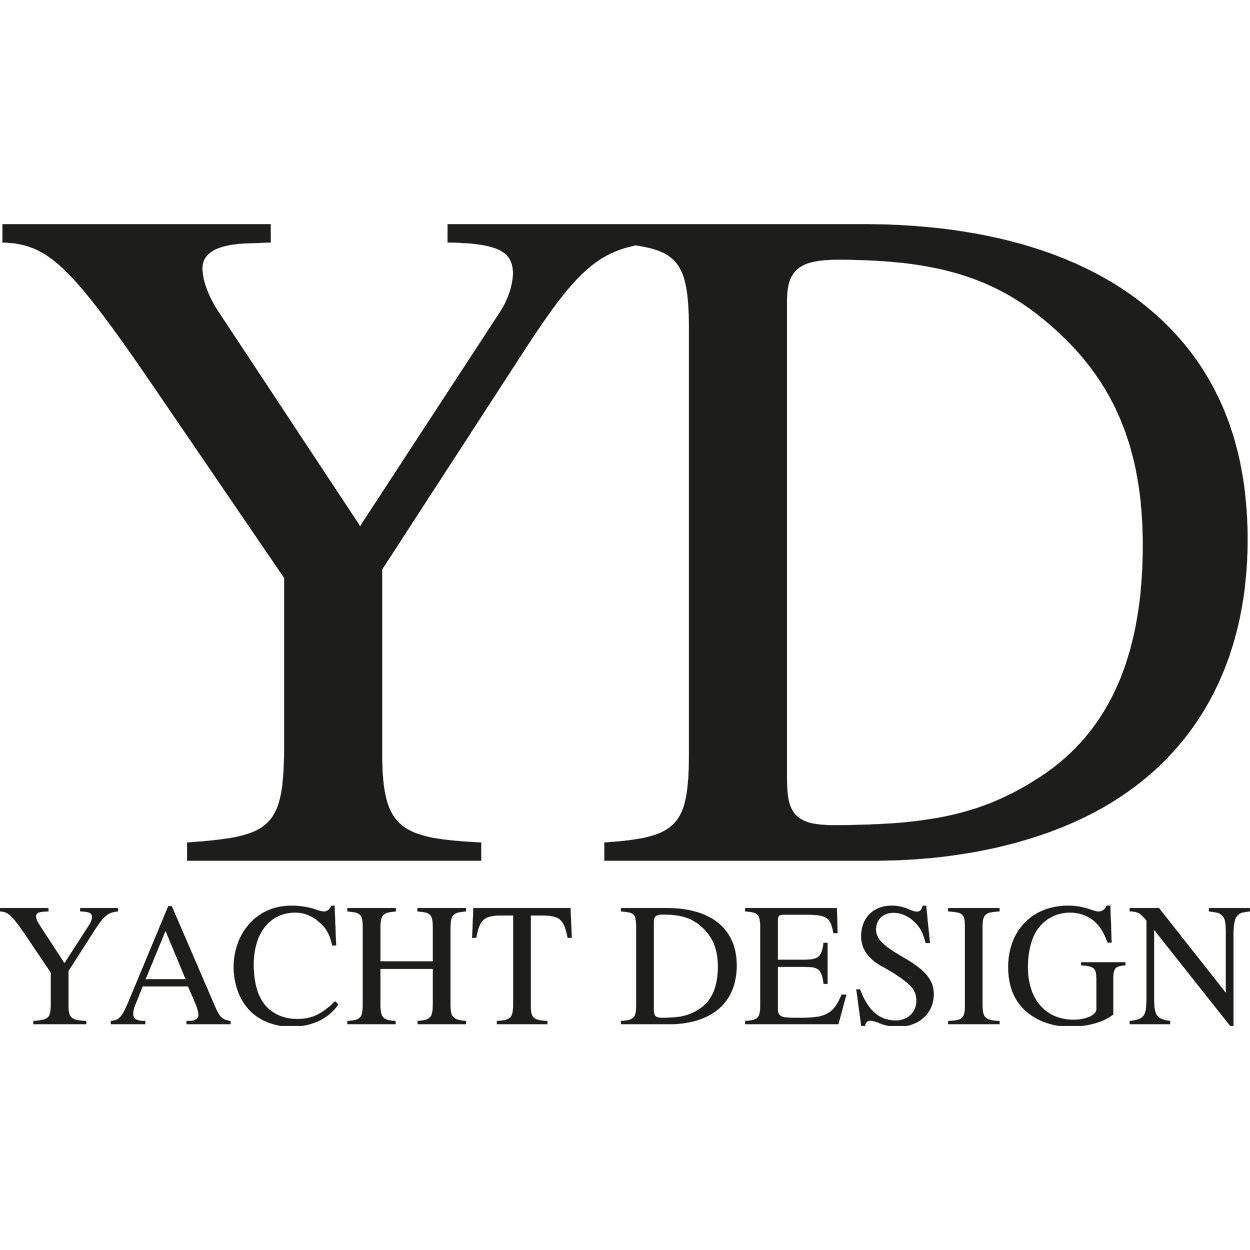 Yacht Design logo